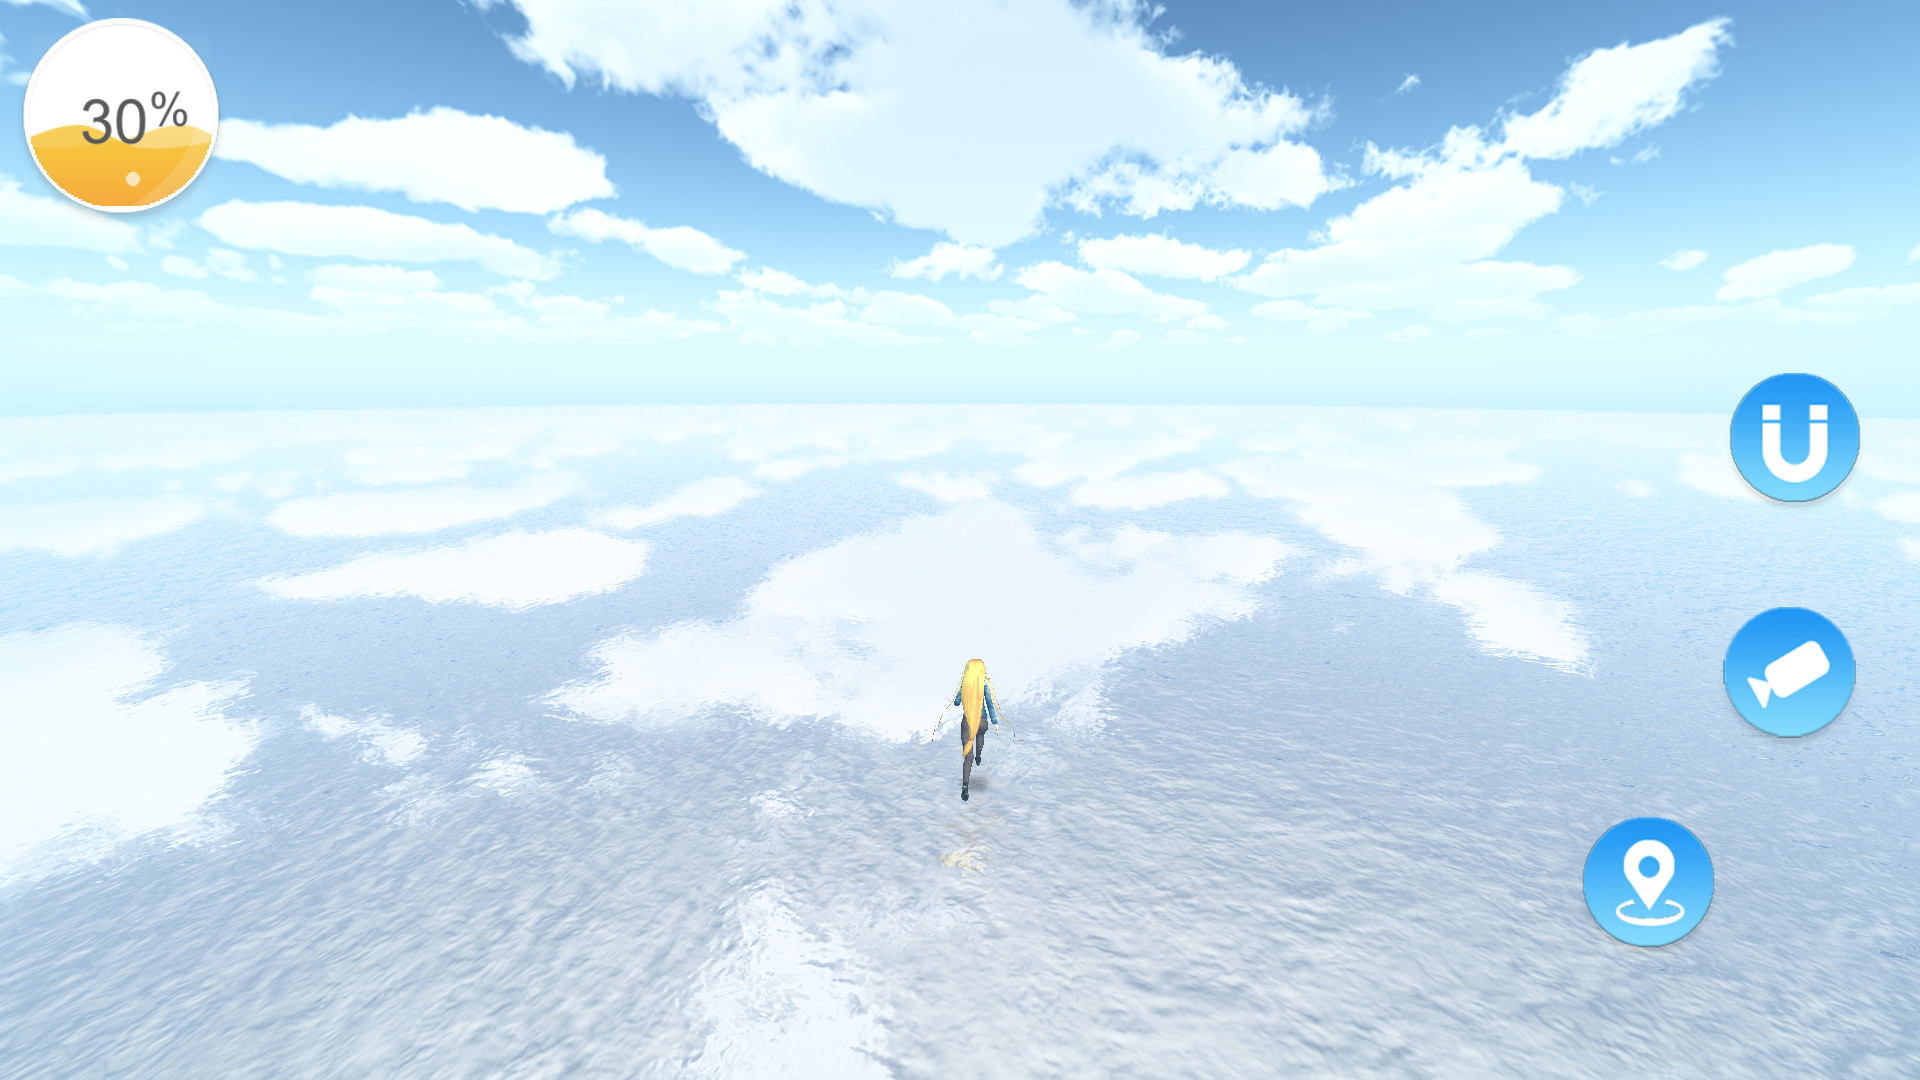 #3. Sky Mirror - Strolling (Steam) 来 自: Woody's Games.